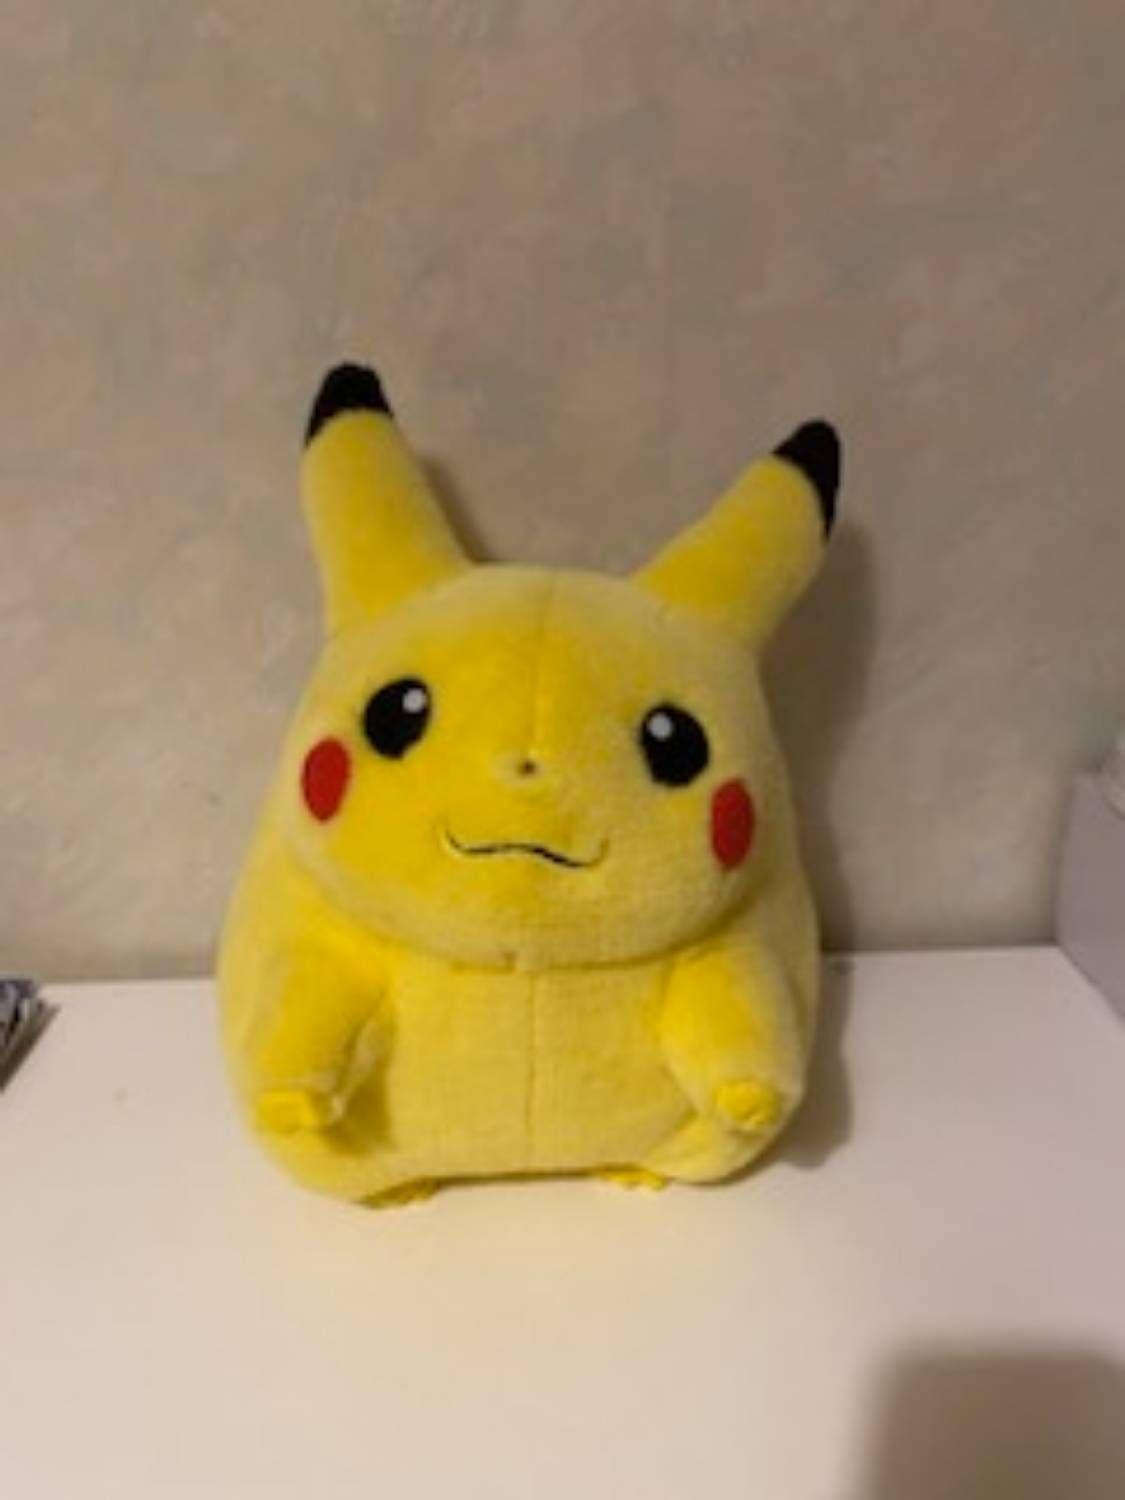 Pikachu Peluche Jouet 50cm Grand Peluche Adorable Ultra-doux